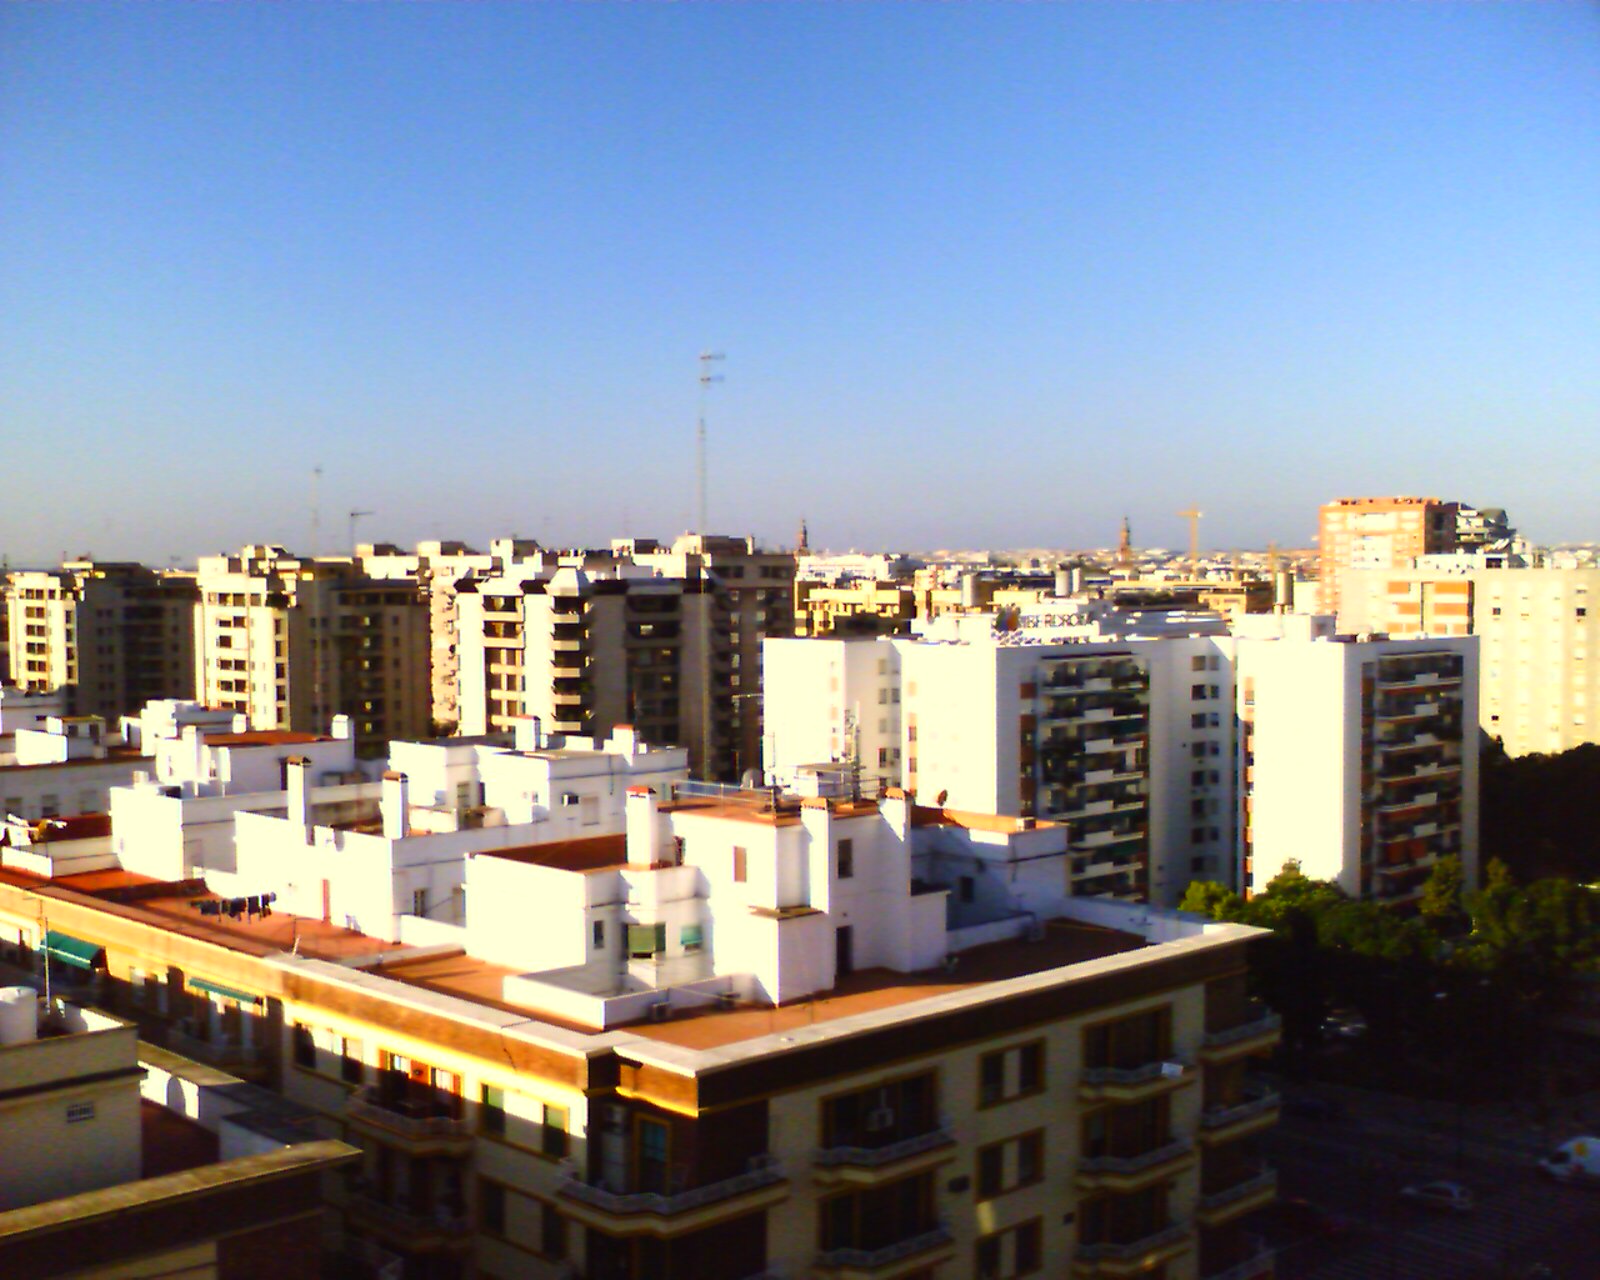 Seville in the Morning